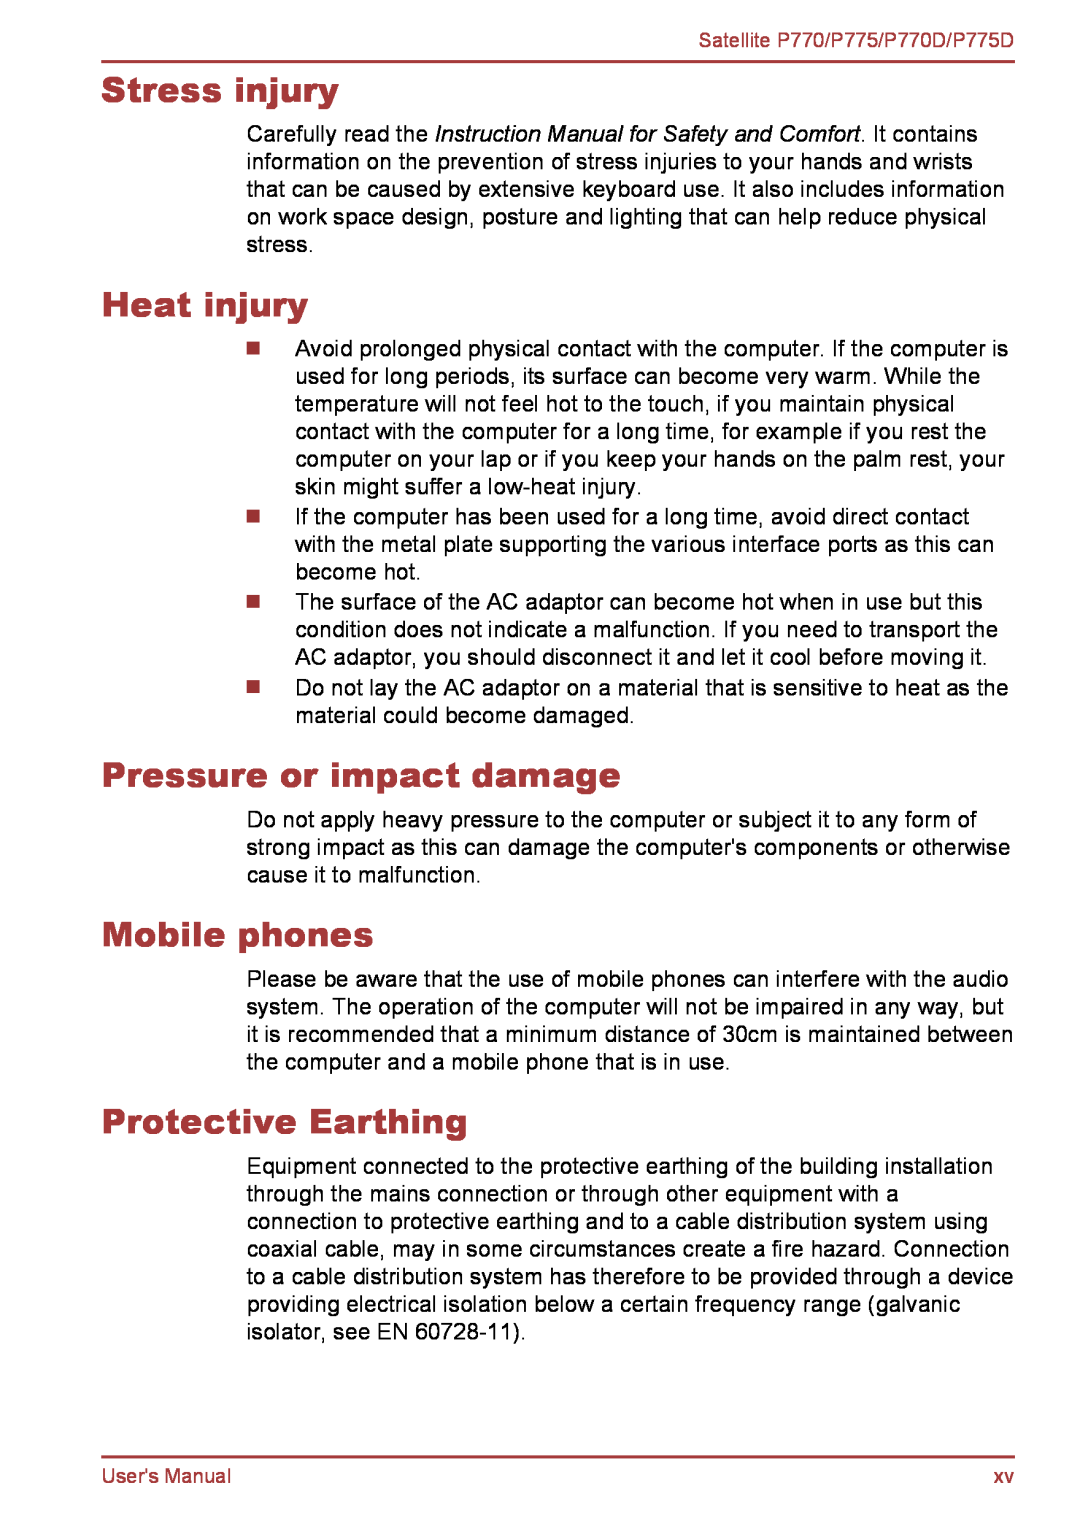 Toshiba P770 user manual Stress injury, Heat injury, Pressure or impact damage, Mobile phones, Protective Earthing 